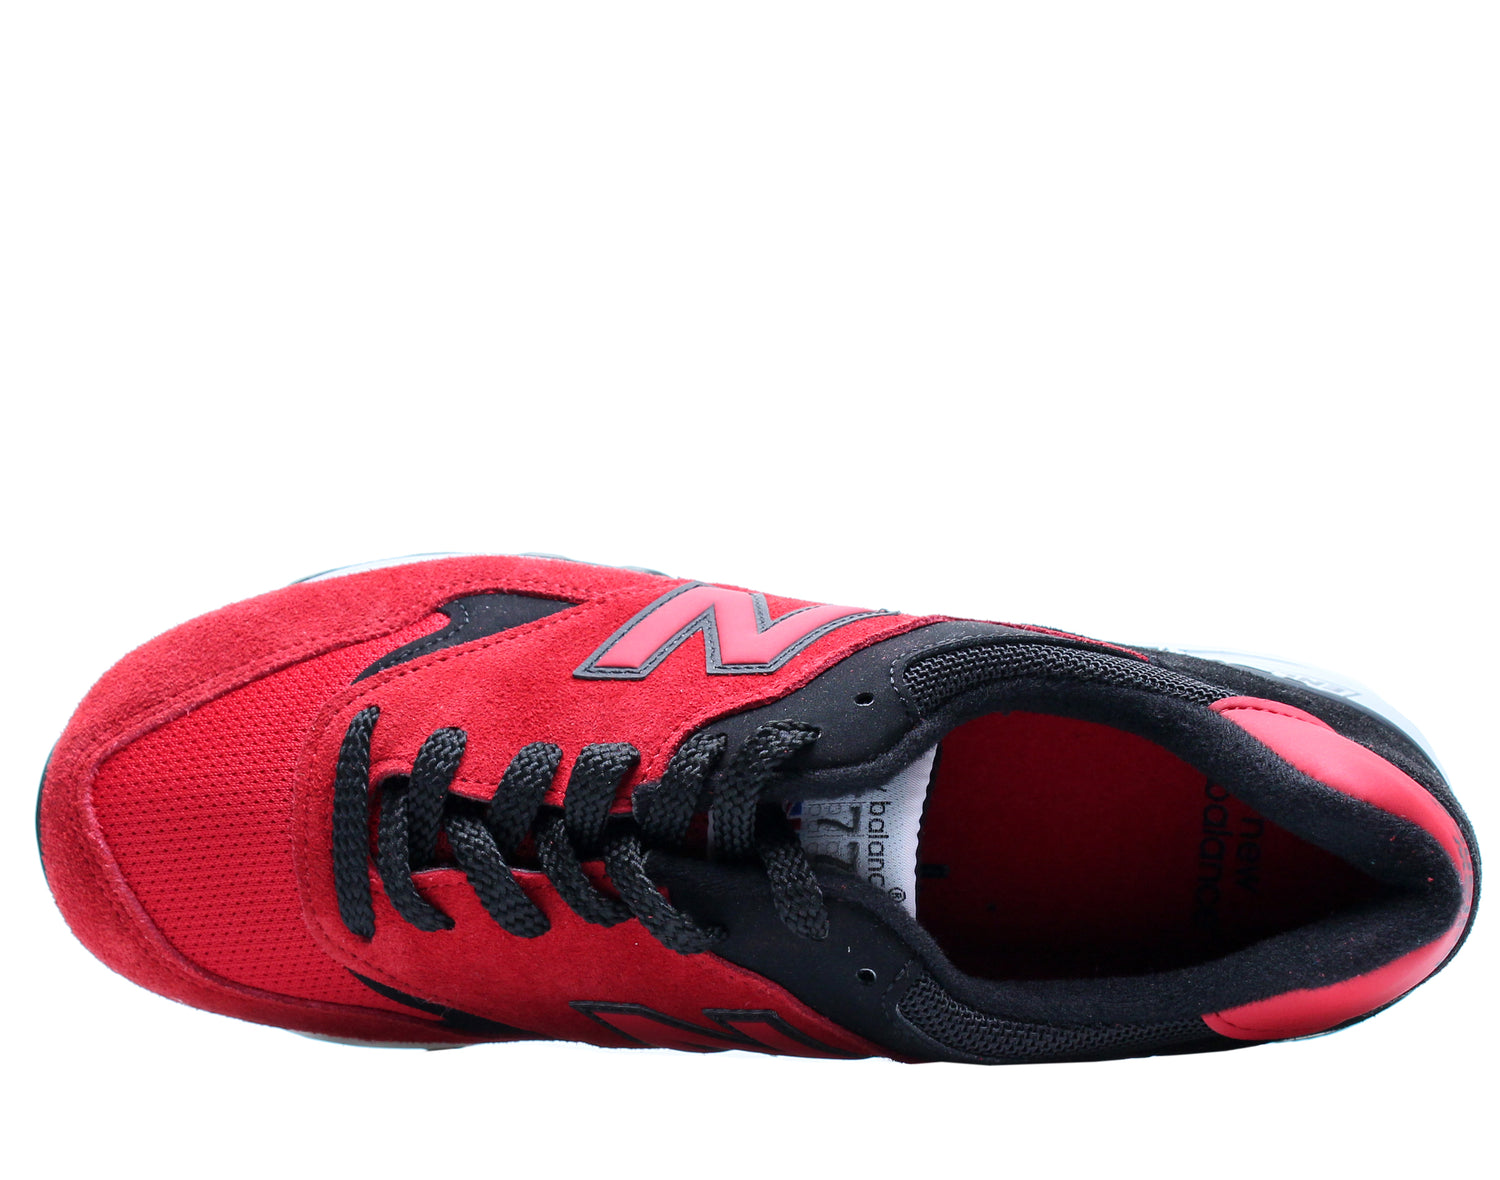 New Balance M577 Classics Men's Running Shoes